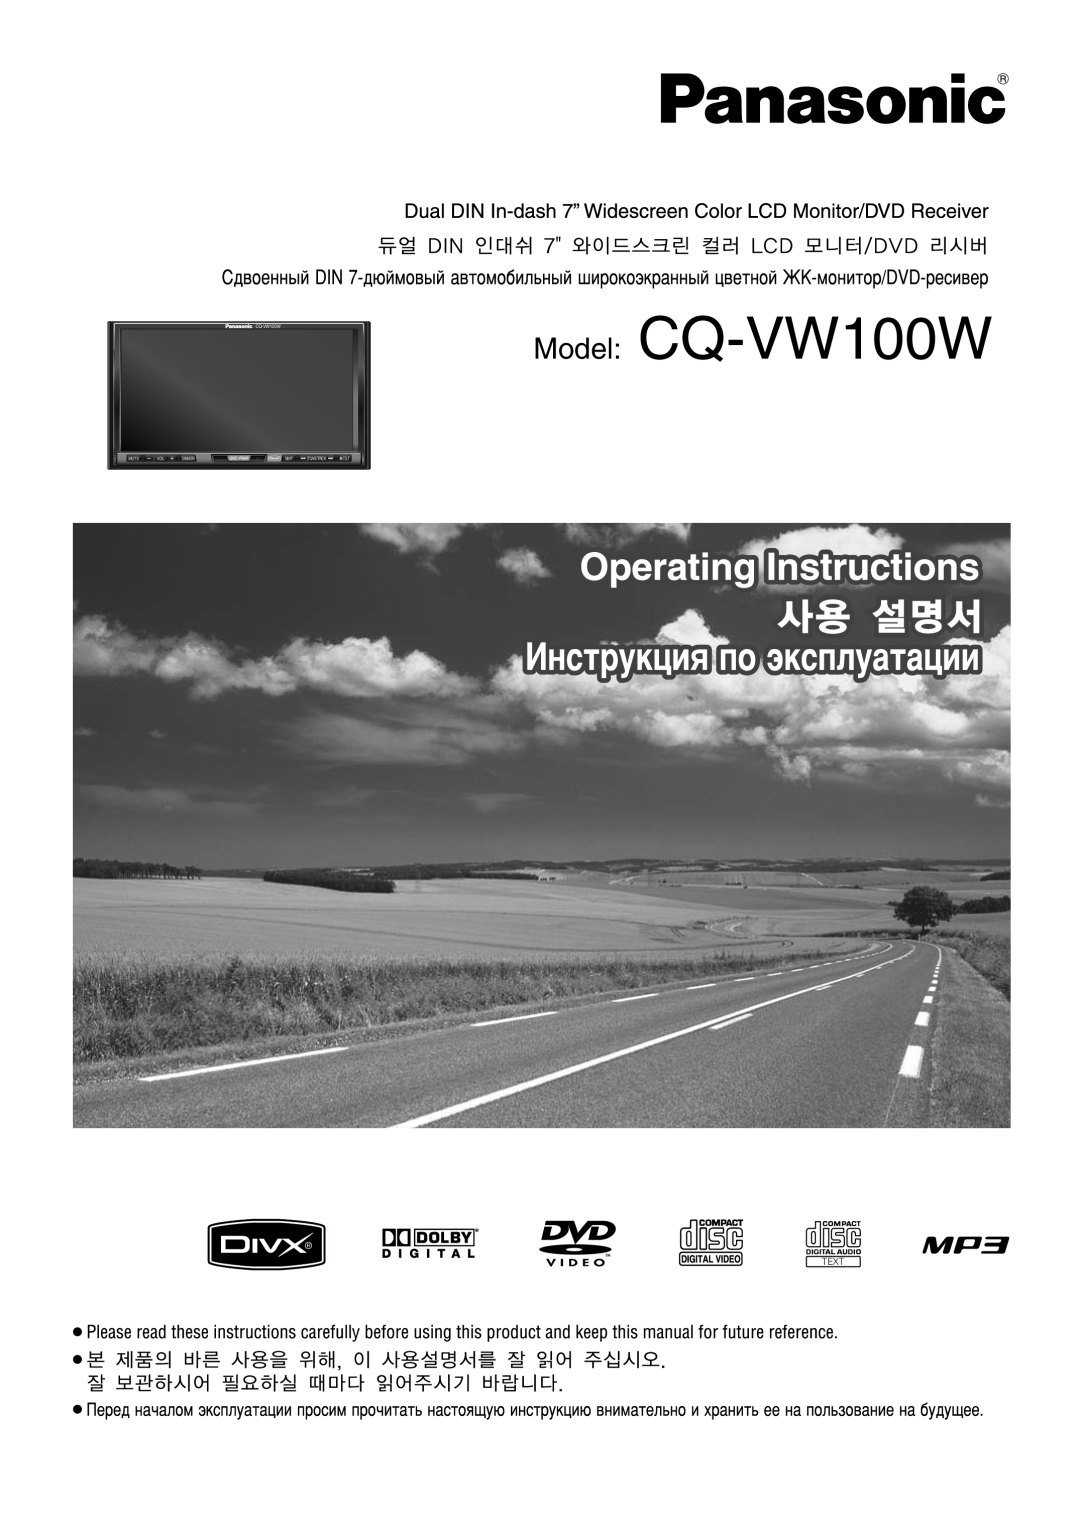 Panasonic manual Model CQ-VW100W, Text, Mute, Dimmer, Src/Pwr, Tune/Trck, Tilt 